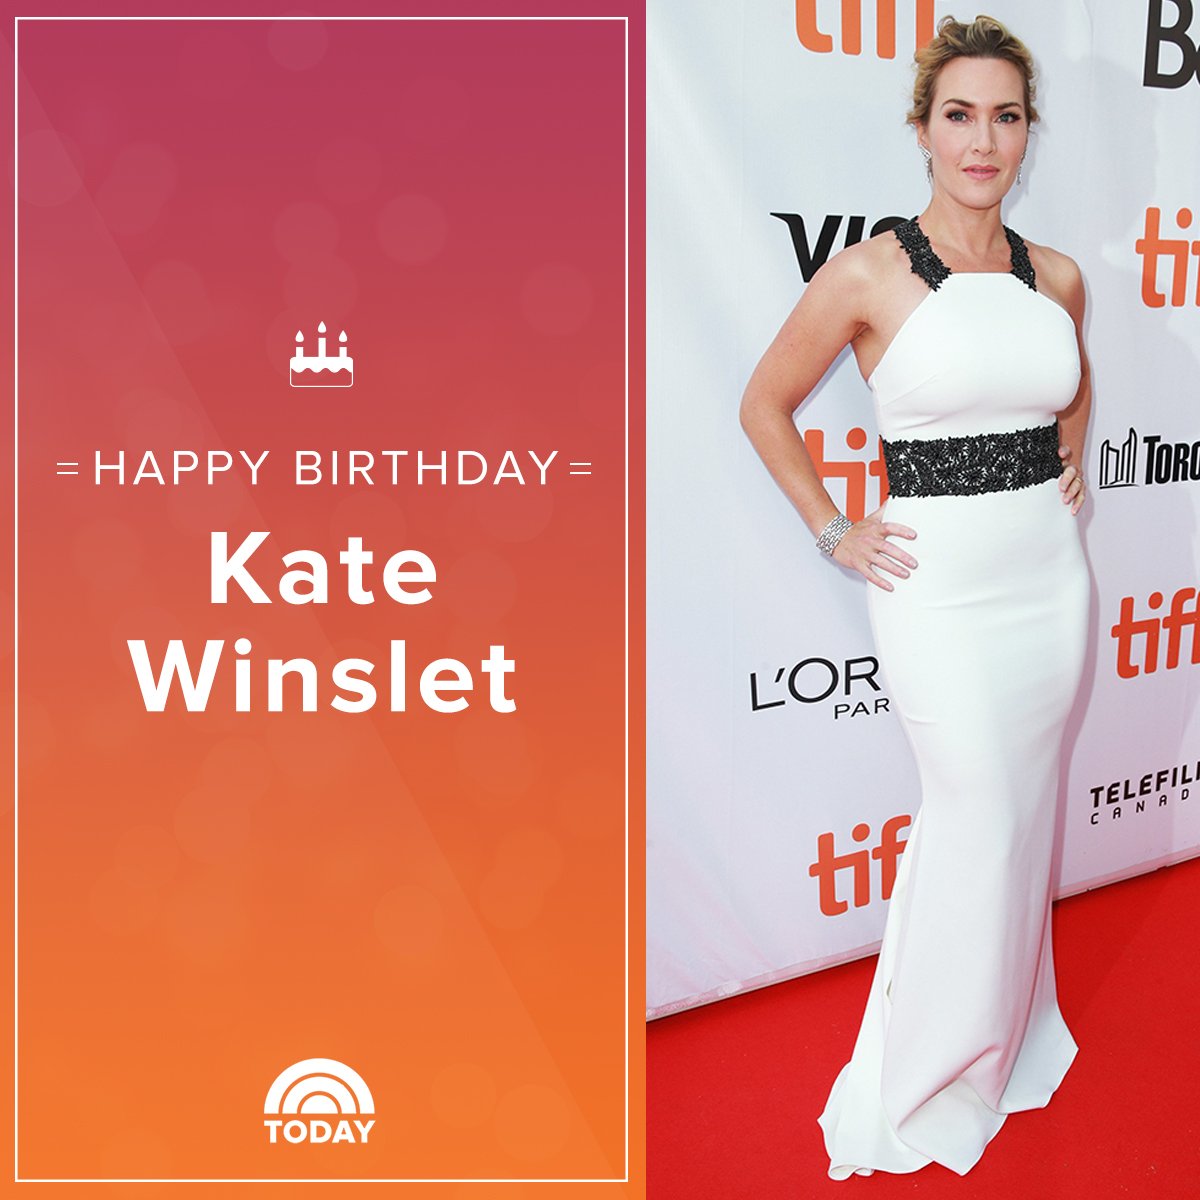 Happy birthday, Kate Winslet! 